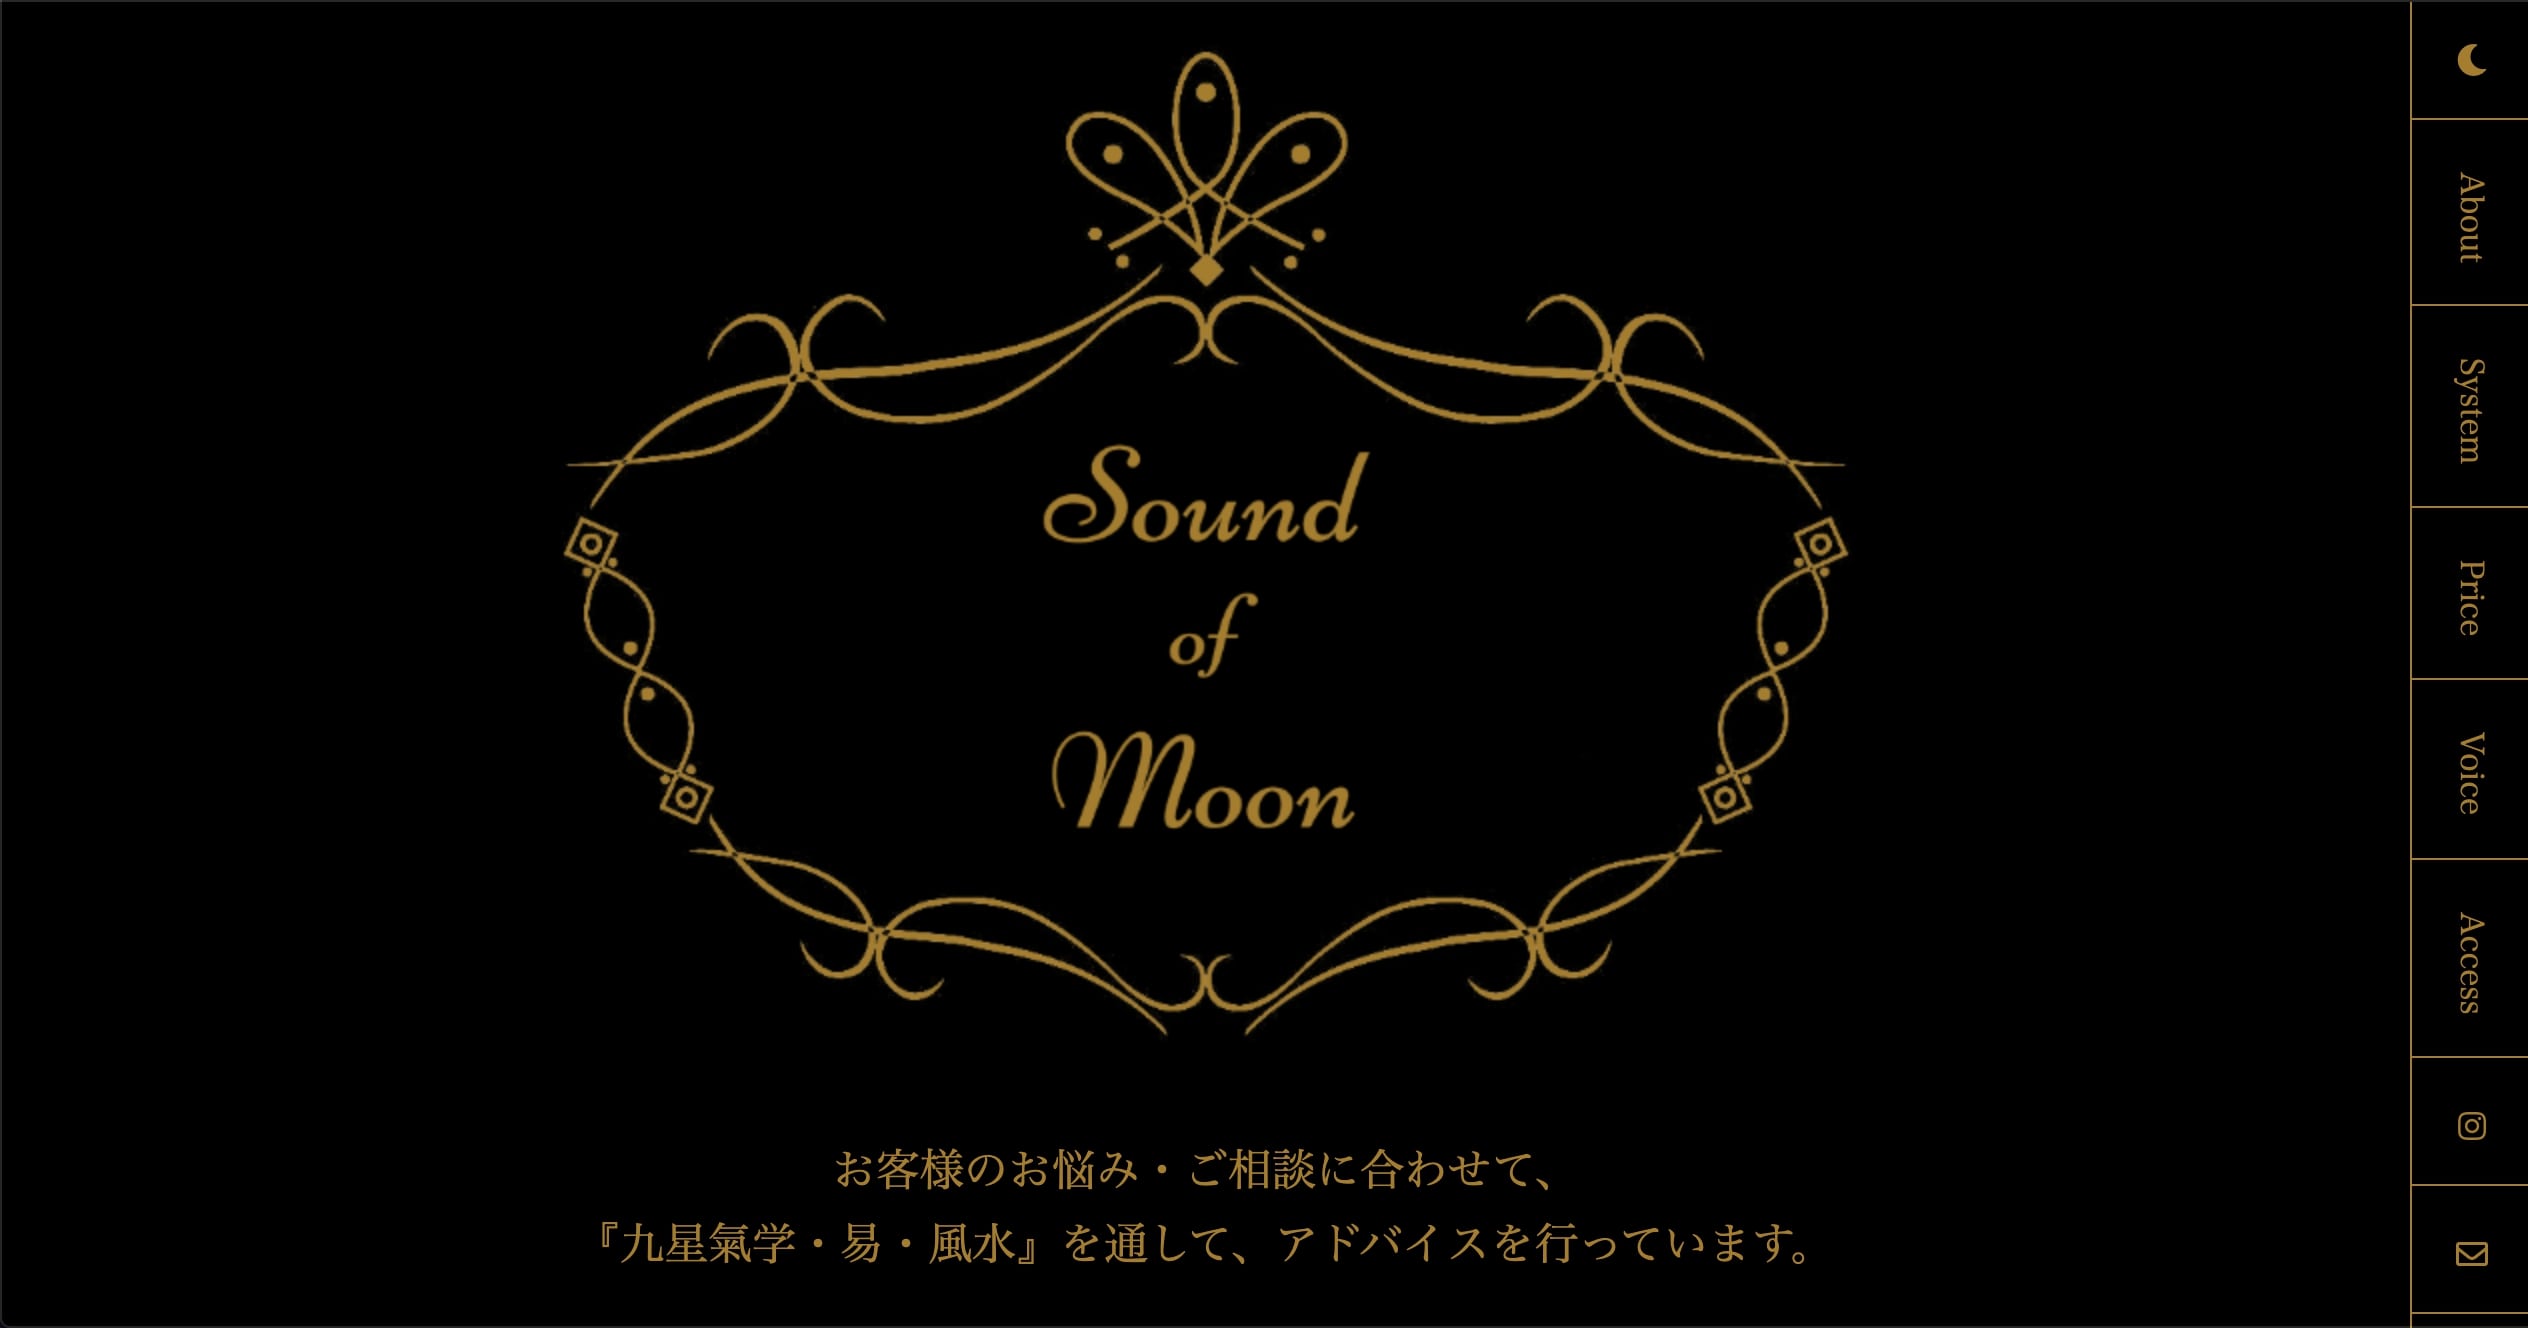 Sound of Moon